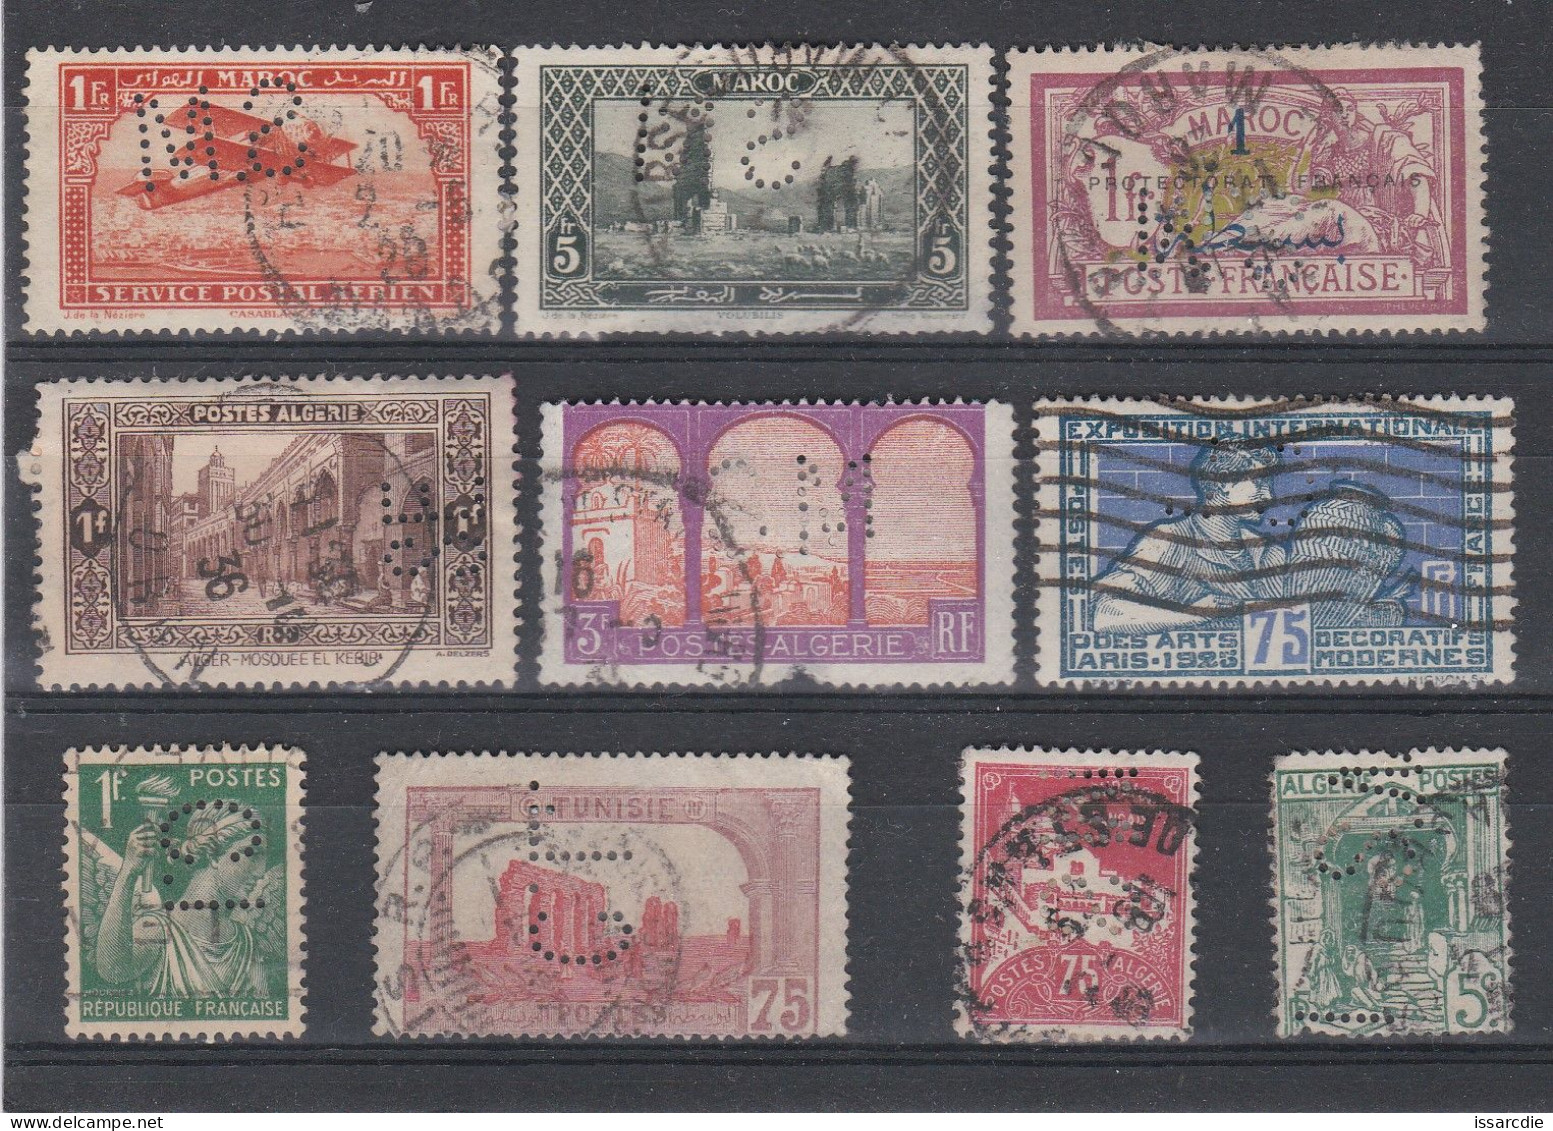 Perforés France Ex: Colonie Algérie; Maroc ; Tunisie - Used Stamps